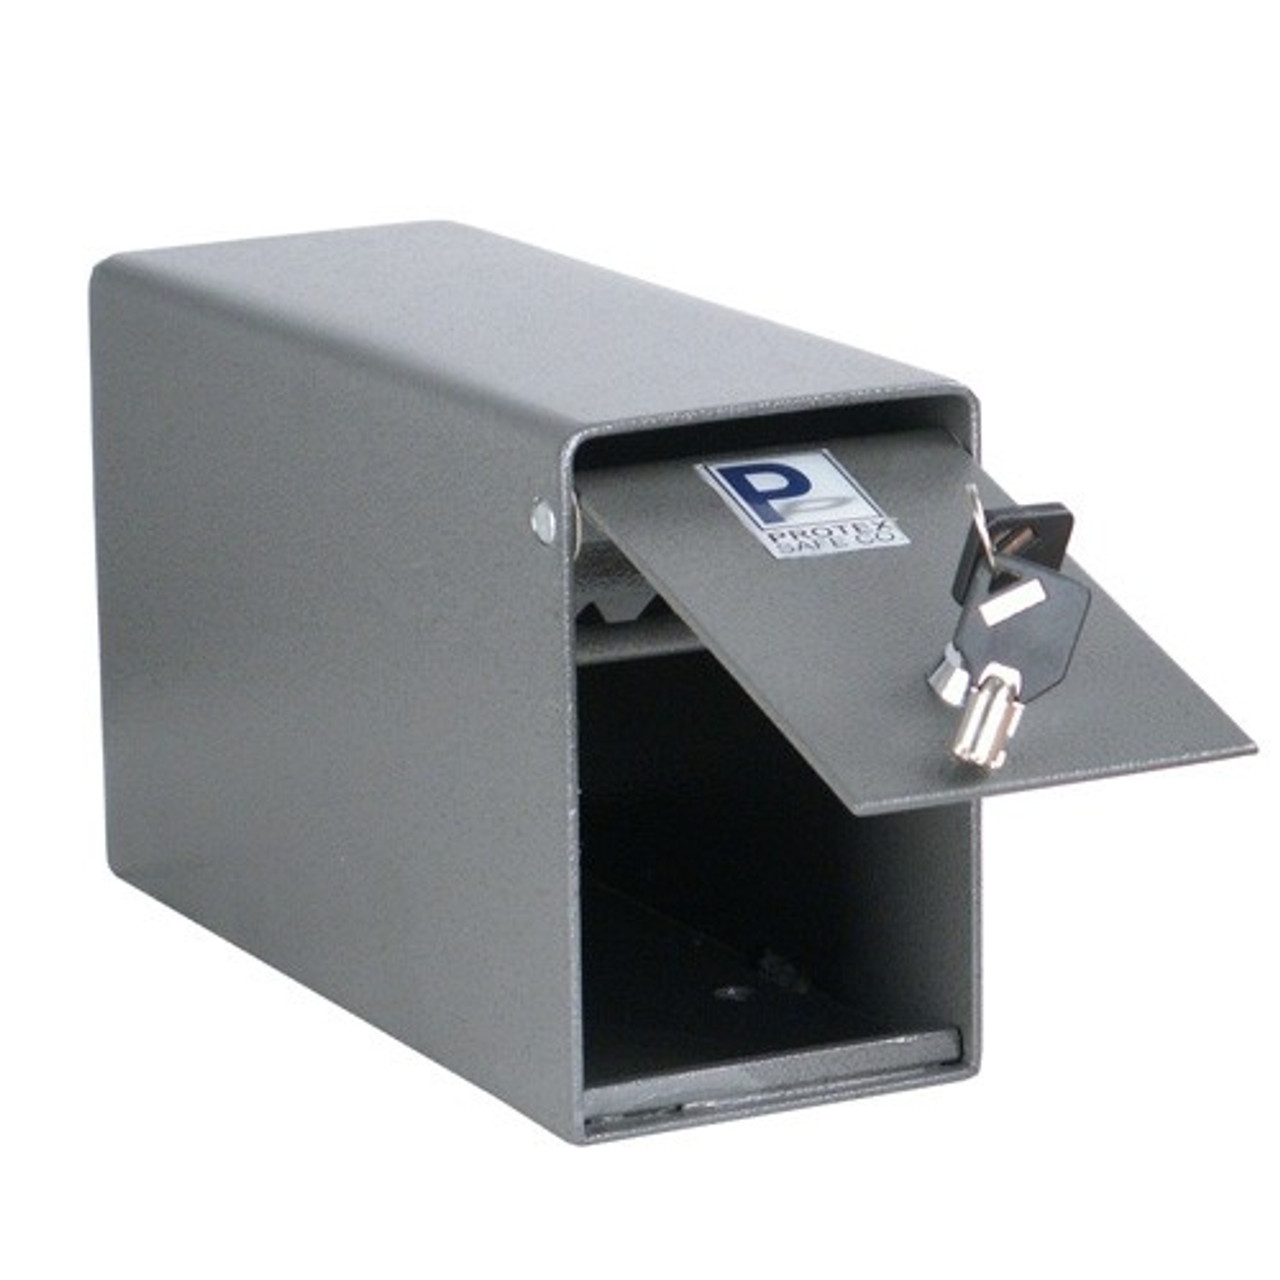 Protex SDB-100 Small Drop Box with Tubular Keys